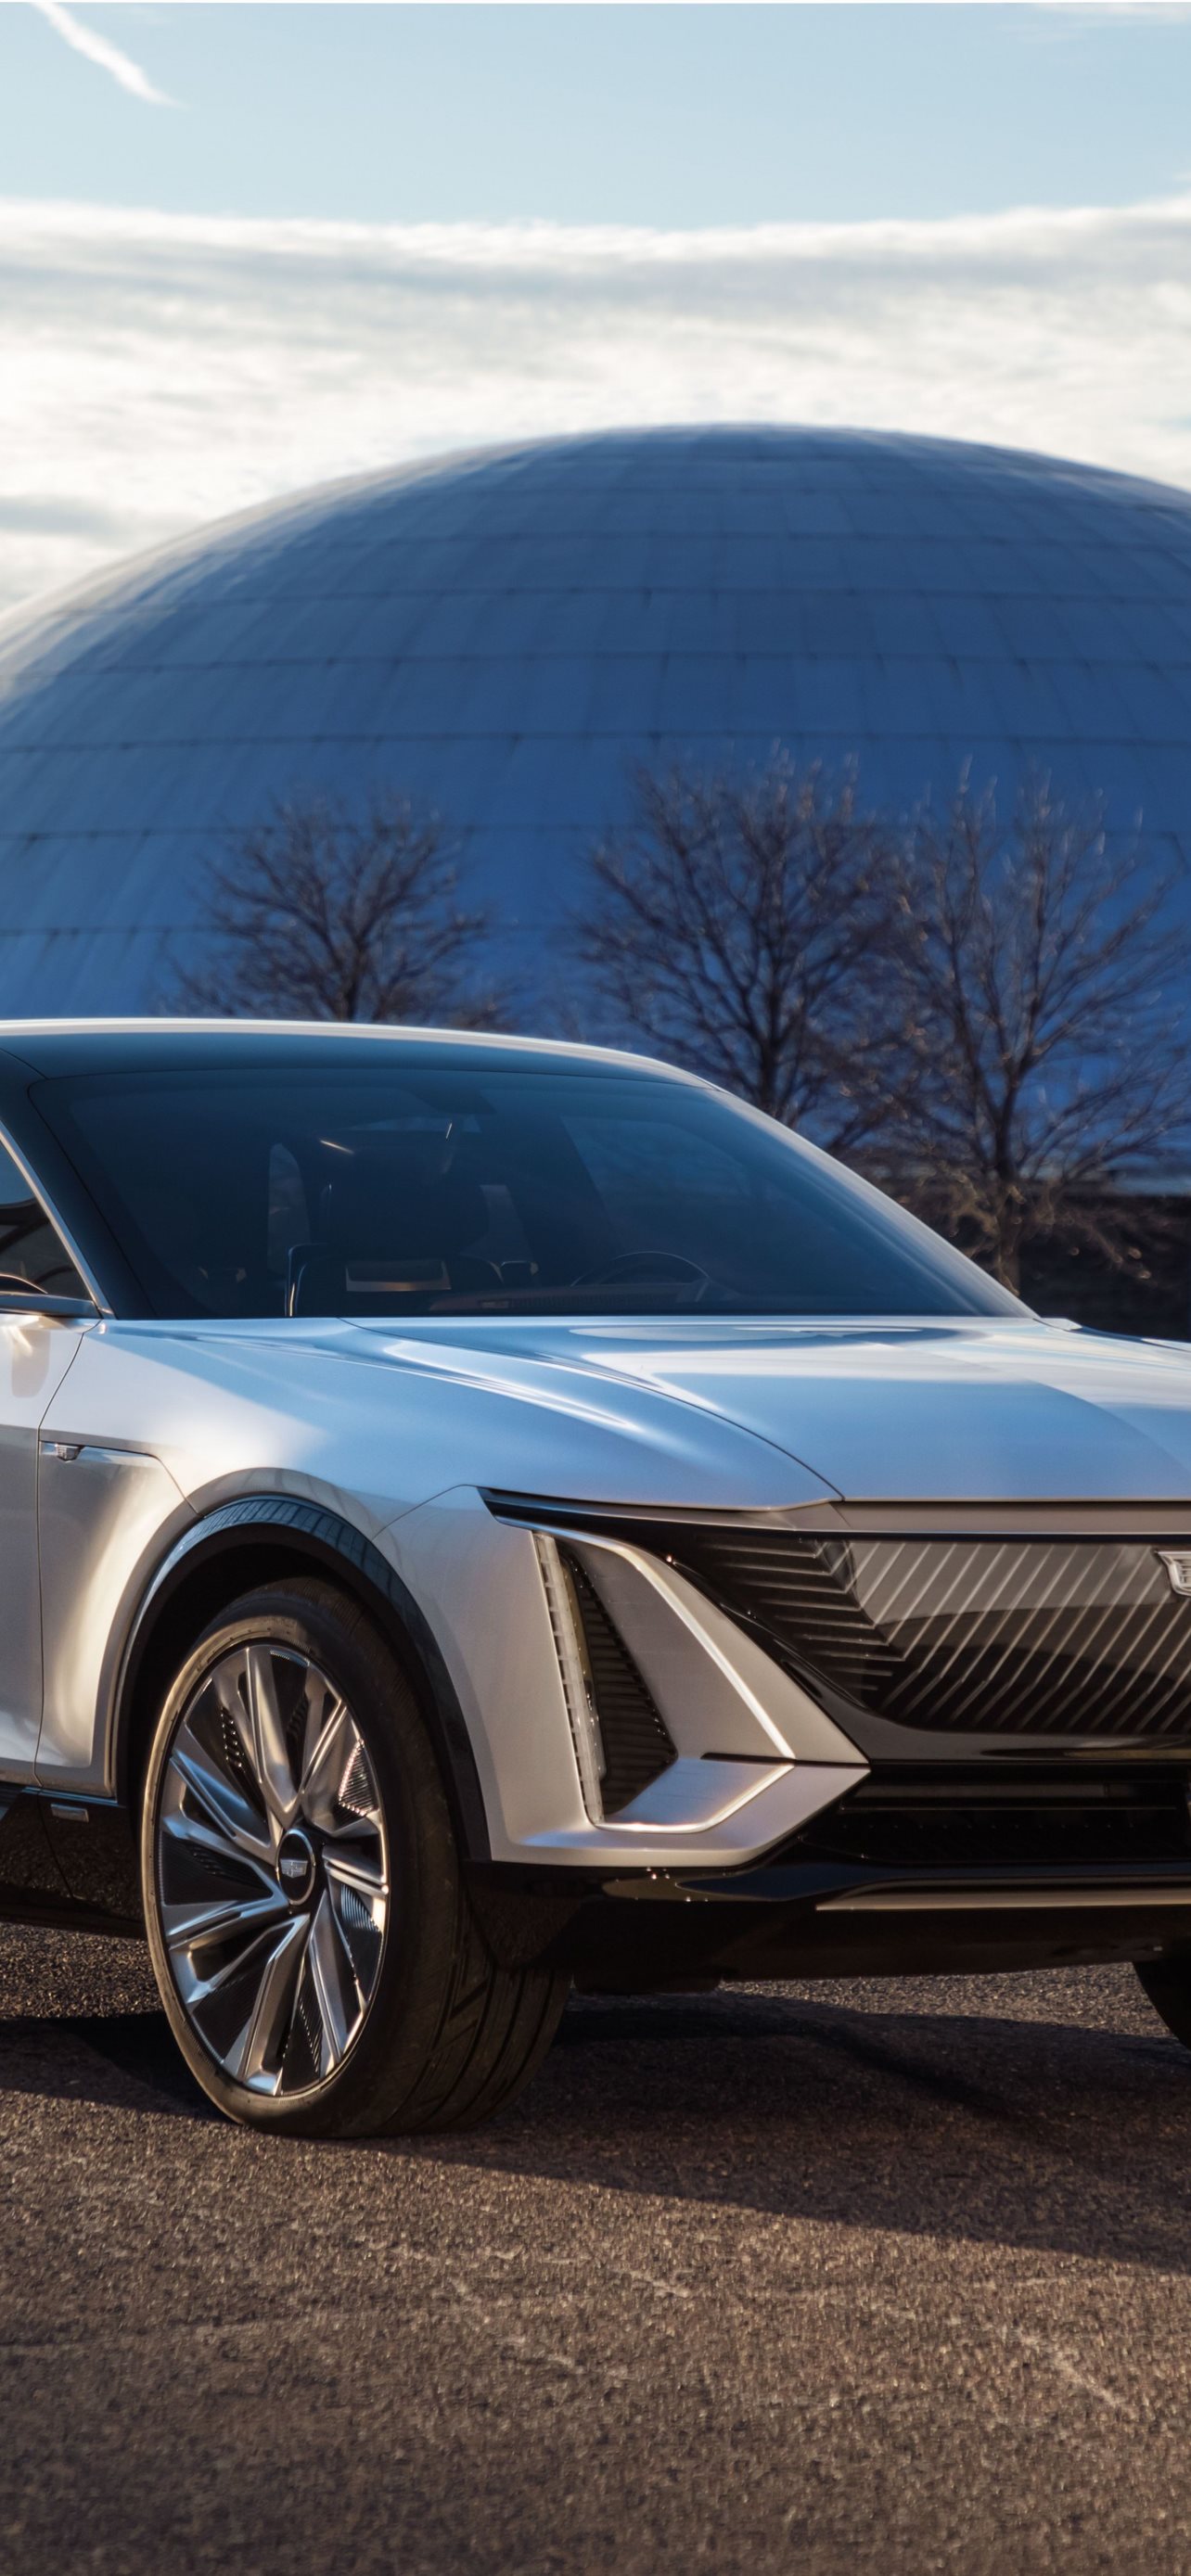 Cadillac Lyriq SUV 2021 cars electric cars 8K Cars. iPhone Wallpaper Free Download